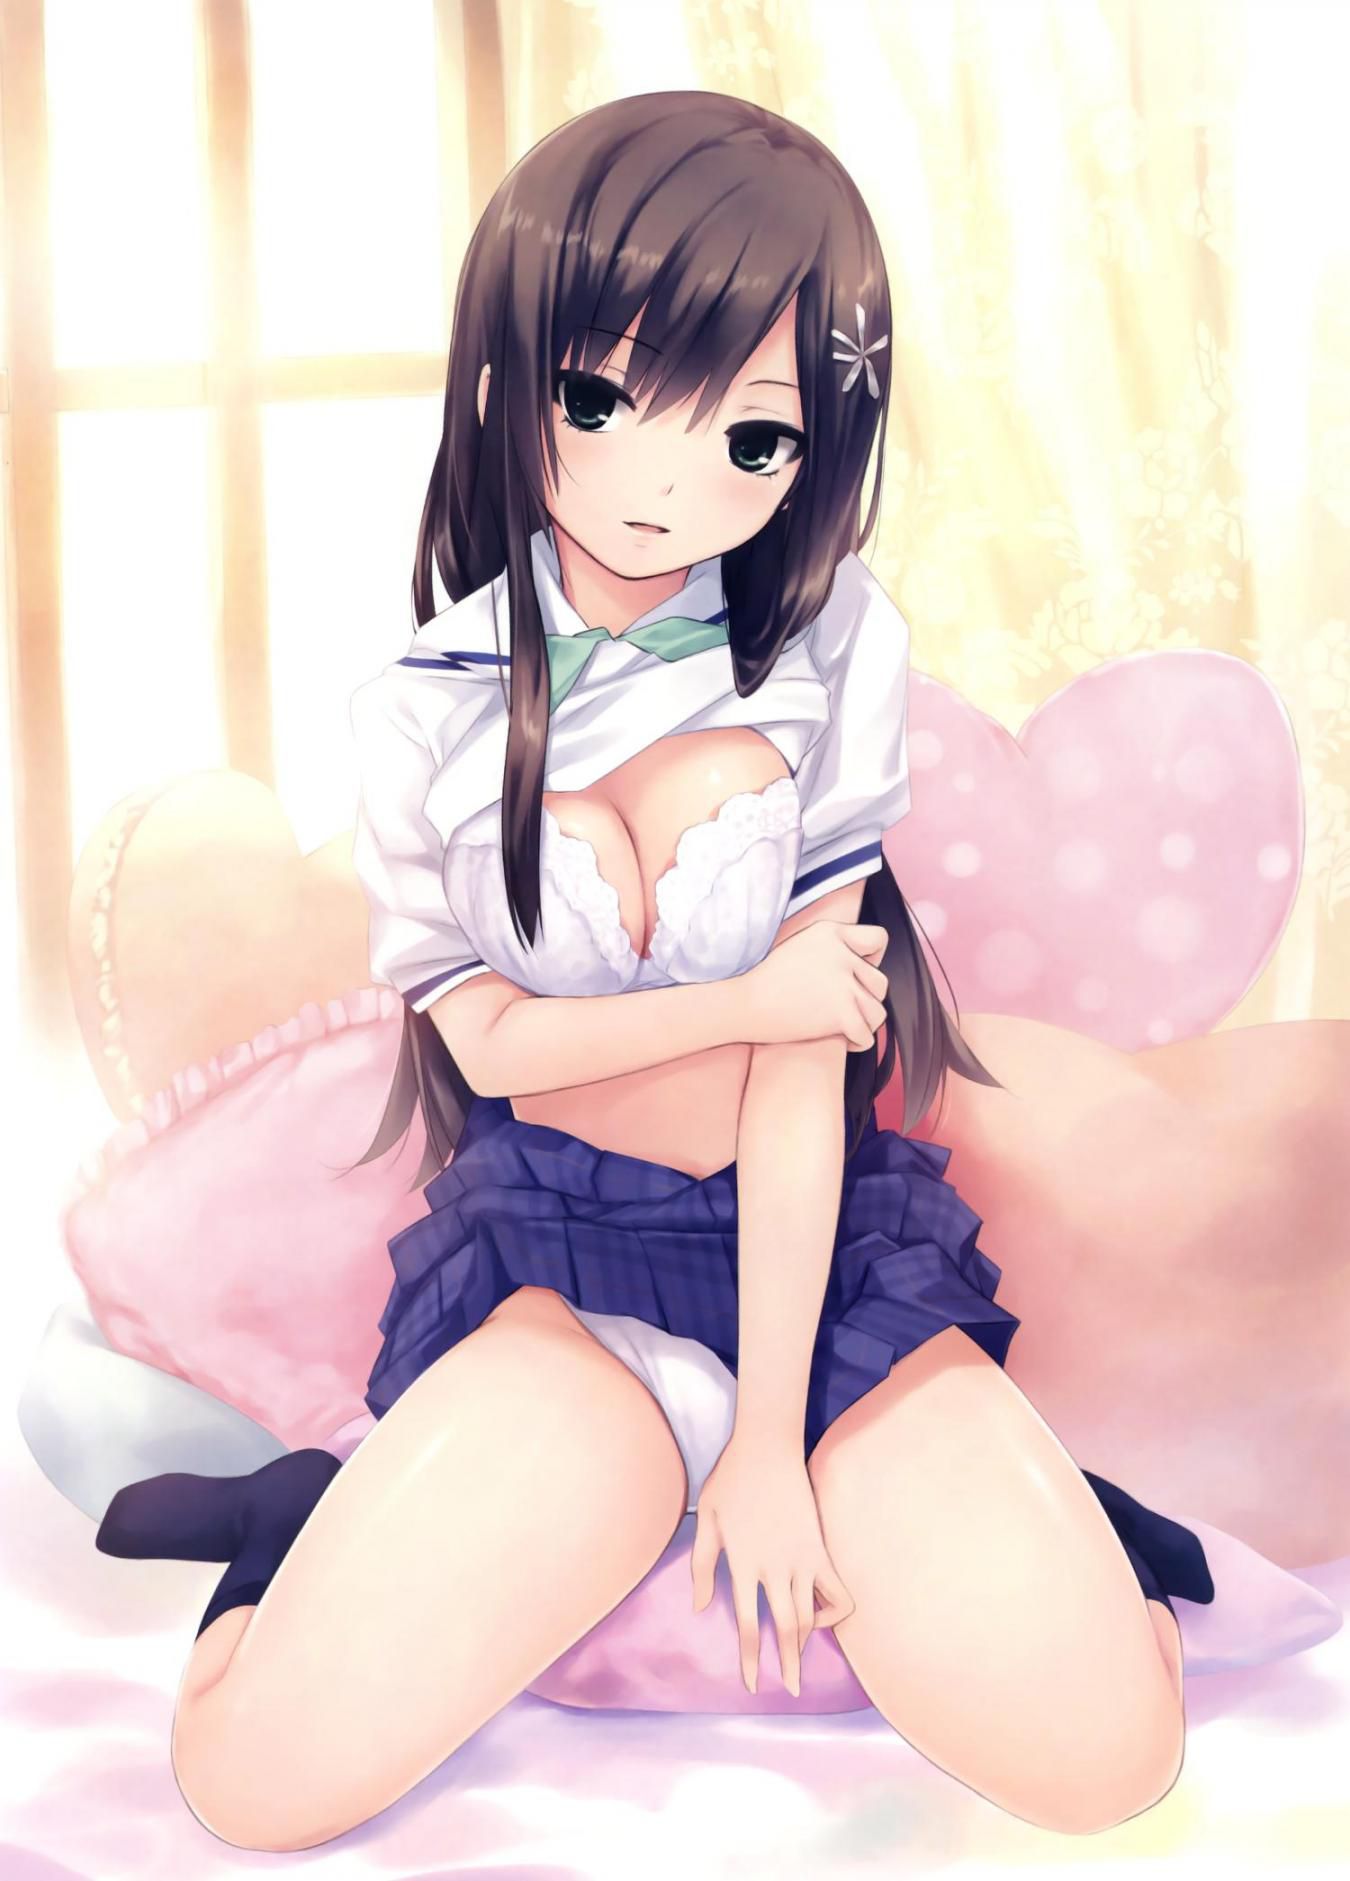 Erotic anime summary Erotic images of beautiful girls wearing uniforms [secondary erotic] 15